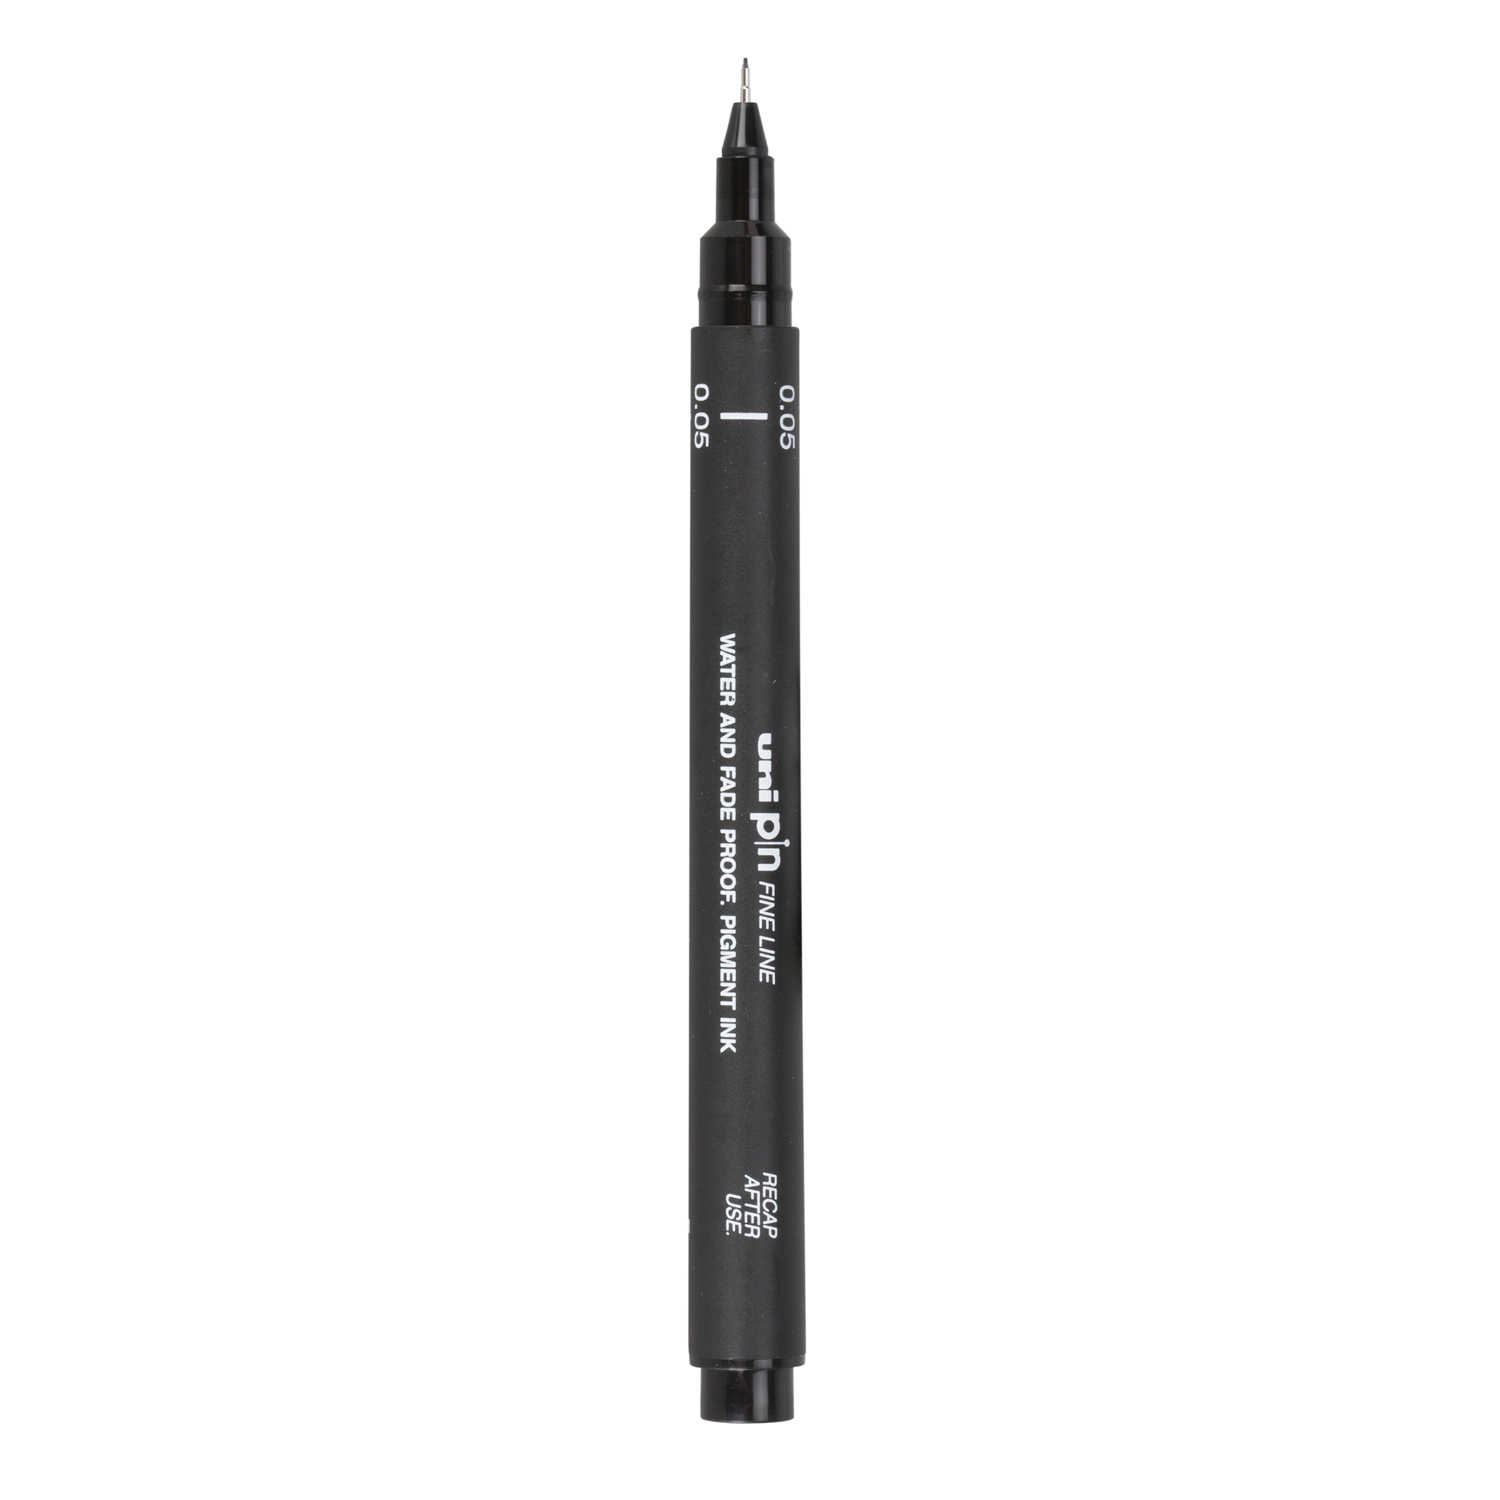 Uniball Pin Black Fine Liner Drawing Pen 0.5mm Image 2